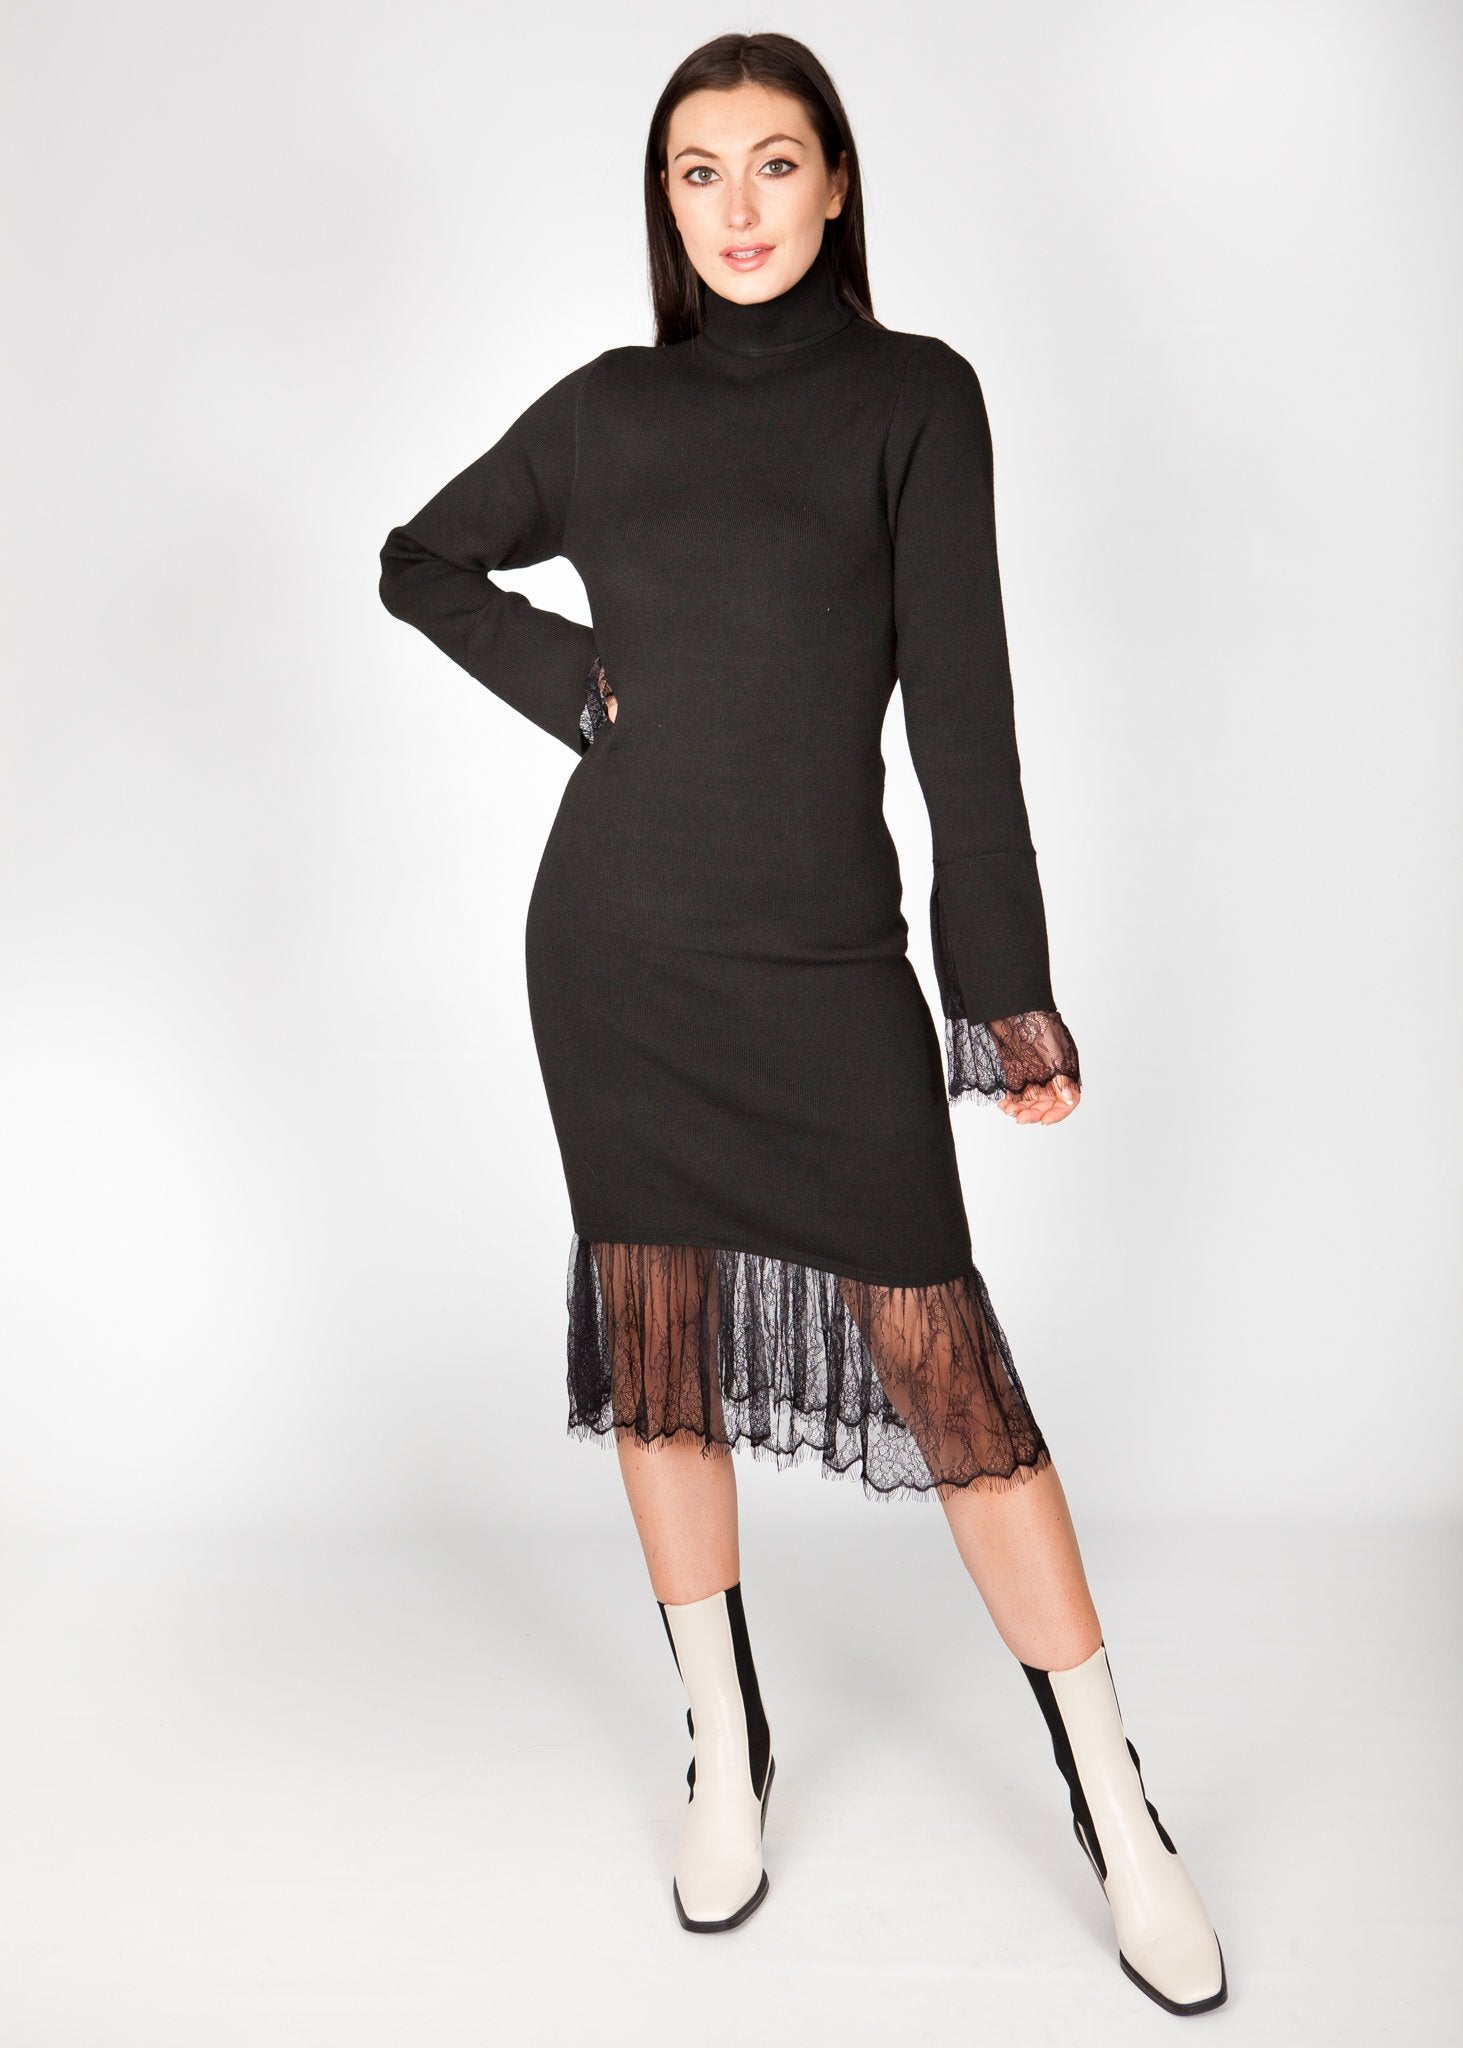 Willow Lace Trim Knit Dress In Black - The Walk in Wardrobe